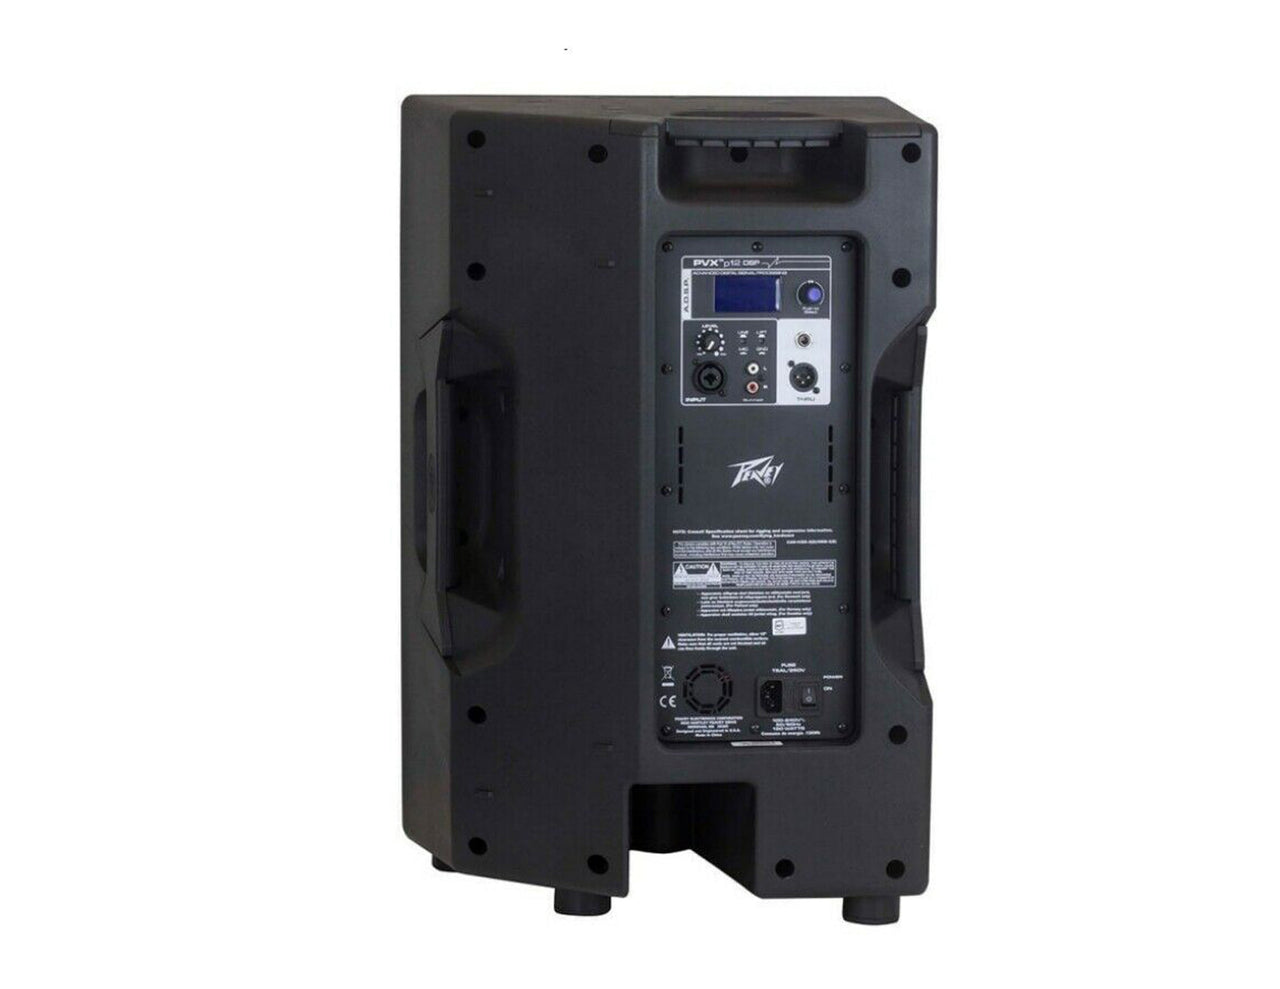 Peavey PVXp12 12" 2-Way 800 Watt Active PA Speaker